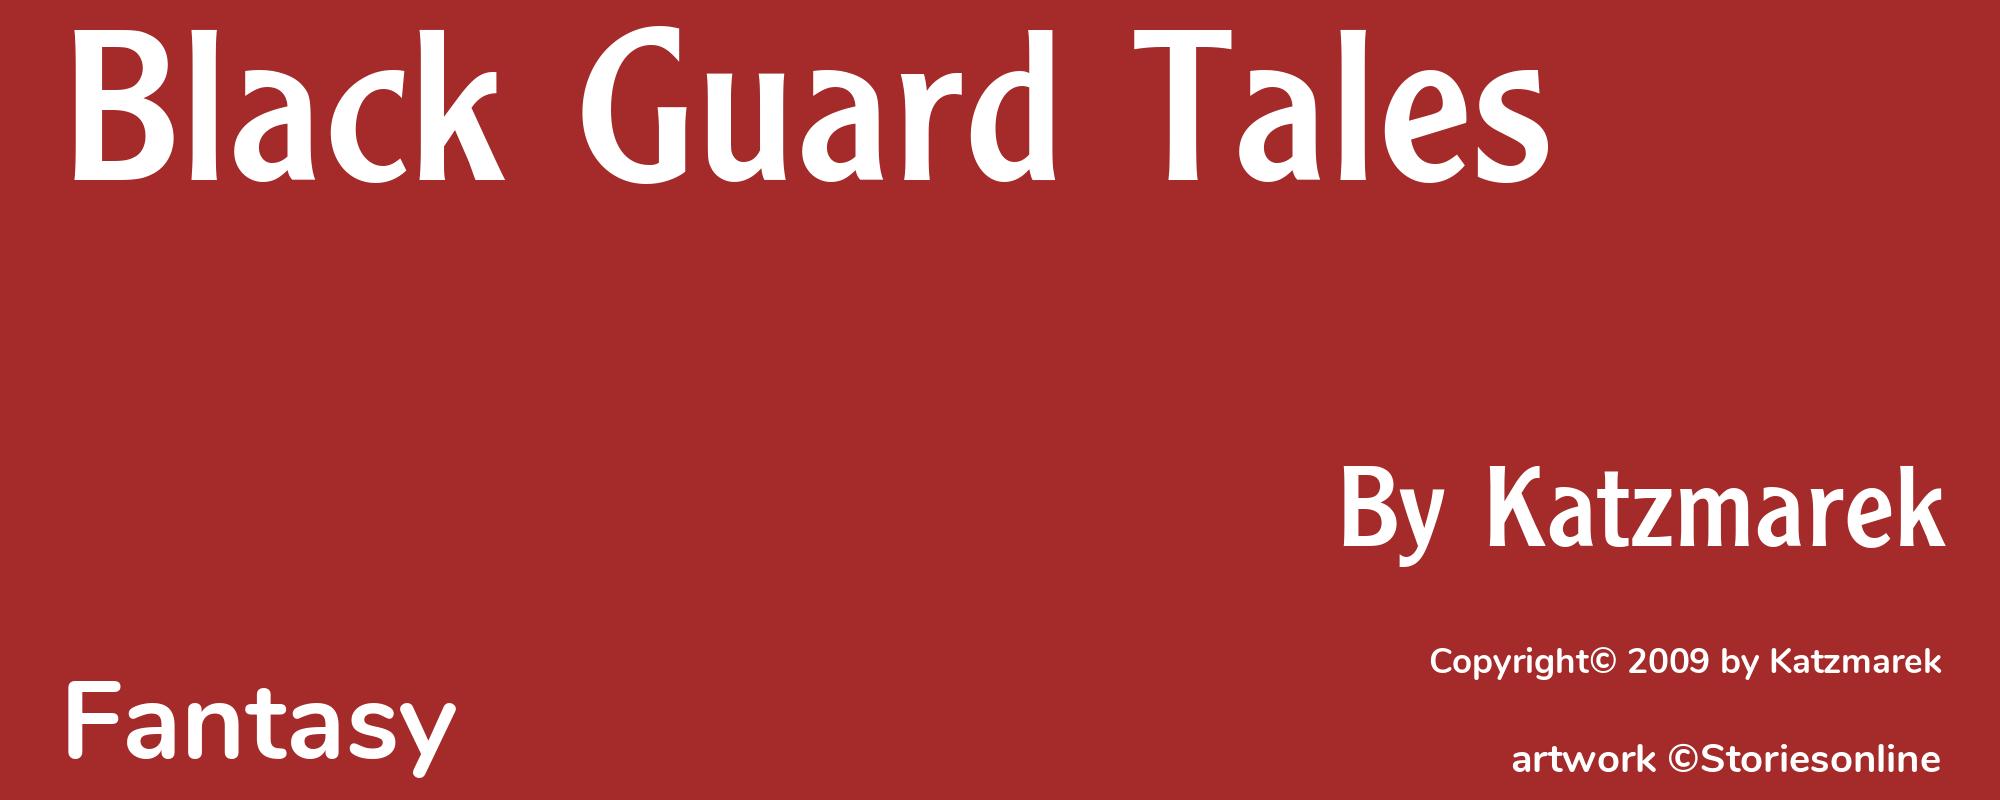 Black Guard Tales - Cover